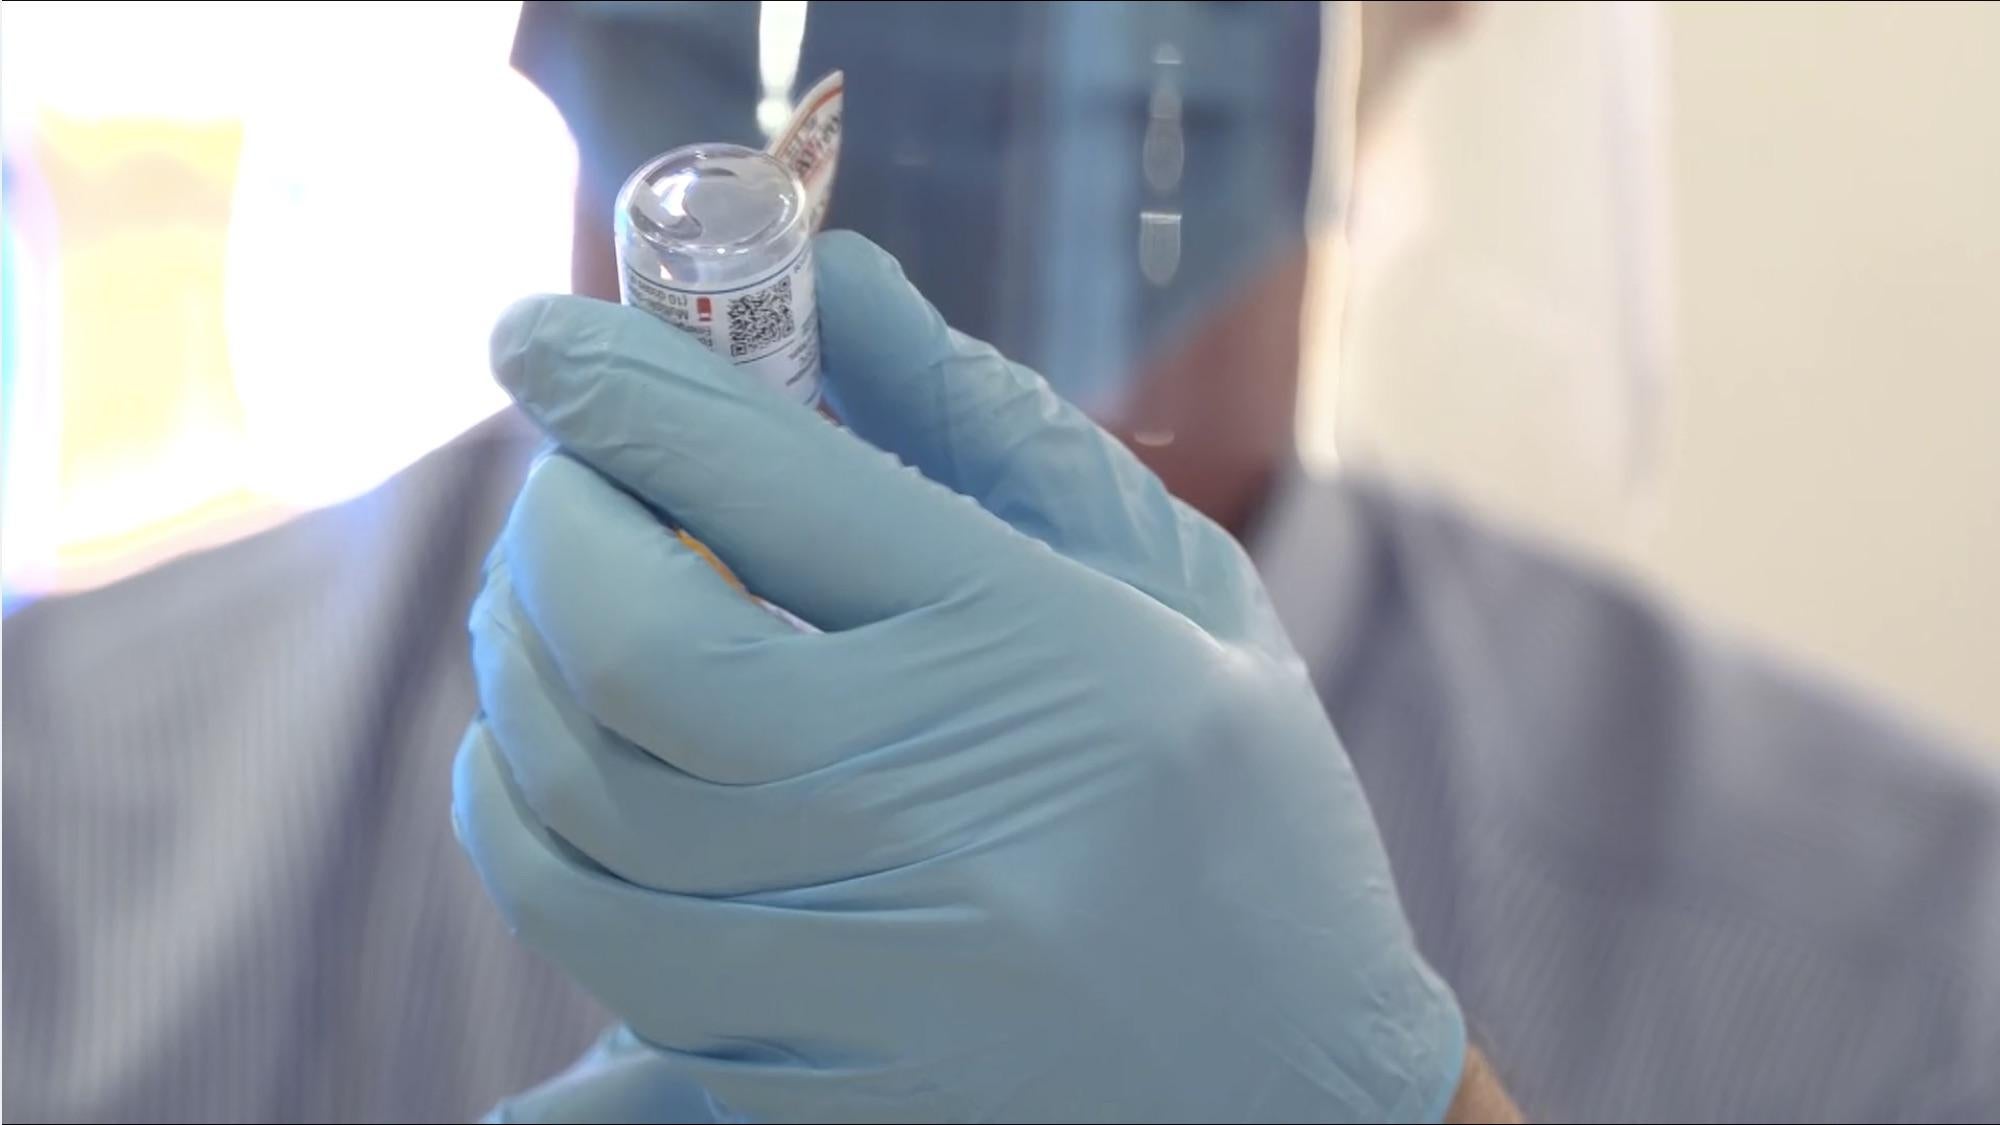 technician in mask examines syringe at UC Davis